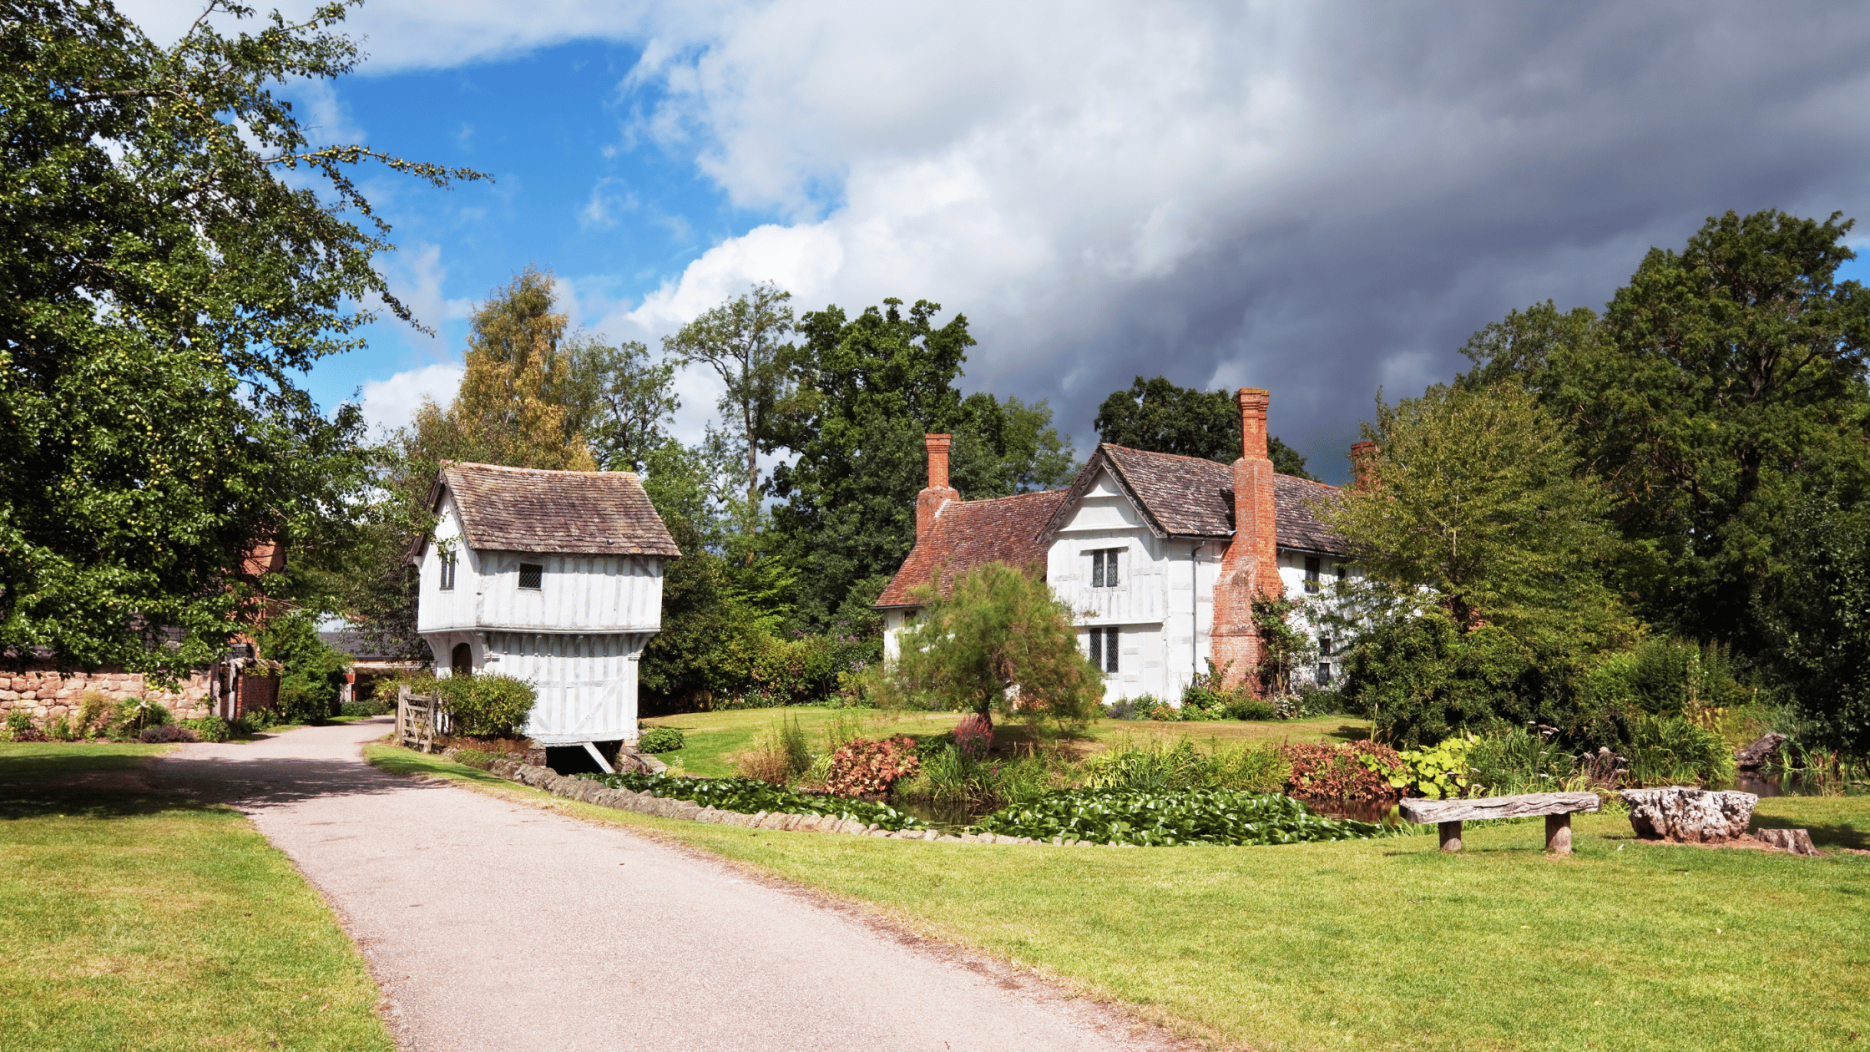 A Tour of Brockhampton Estate: From Gardens to Manor House